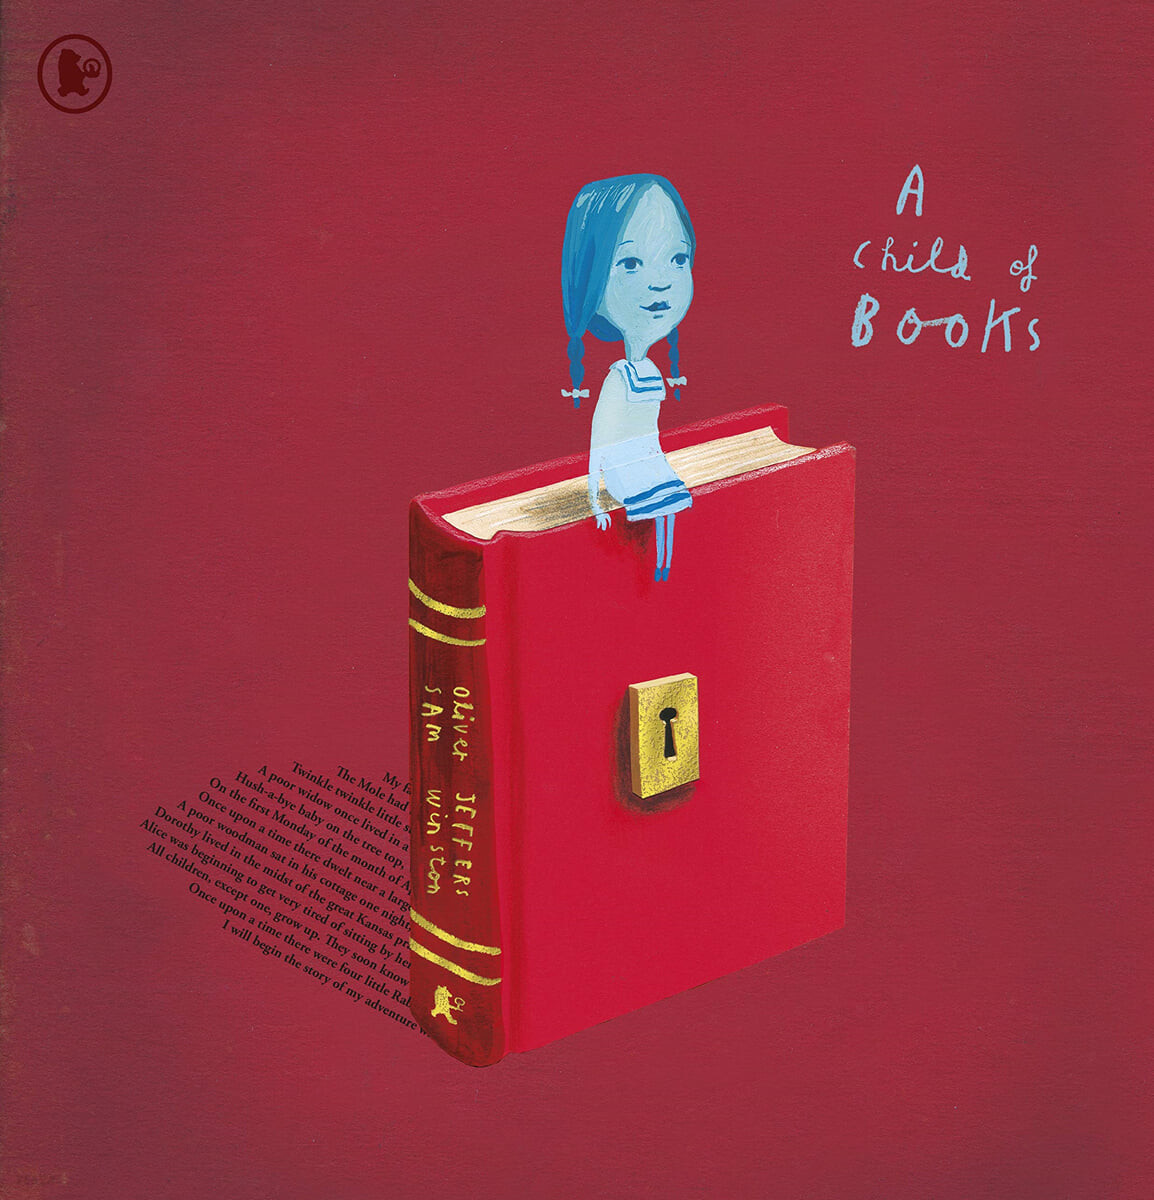 (A) Child of books